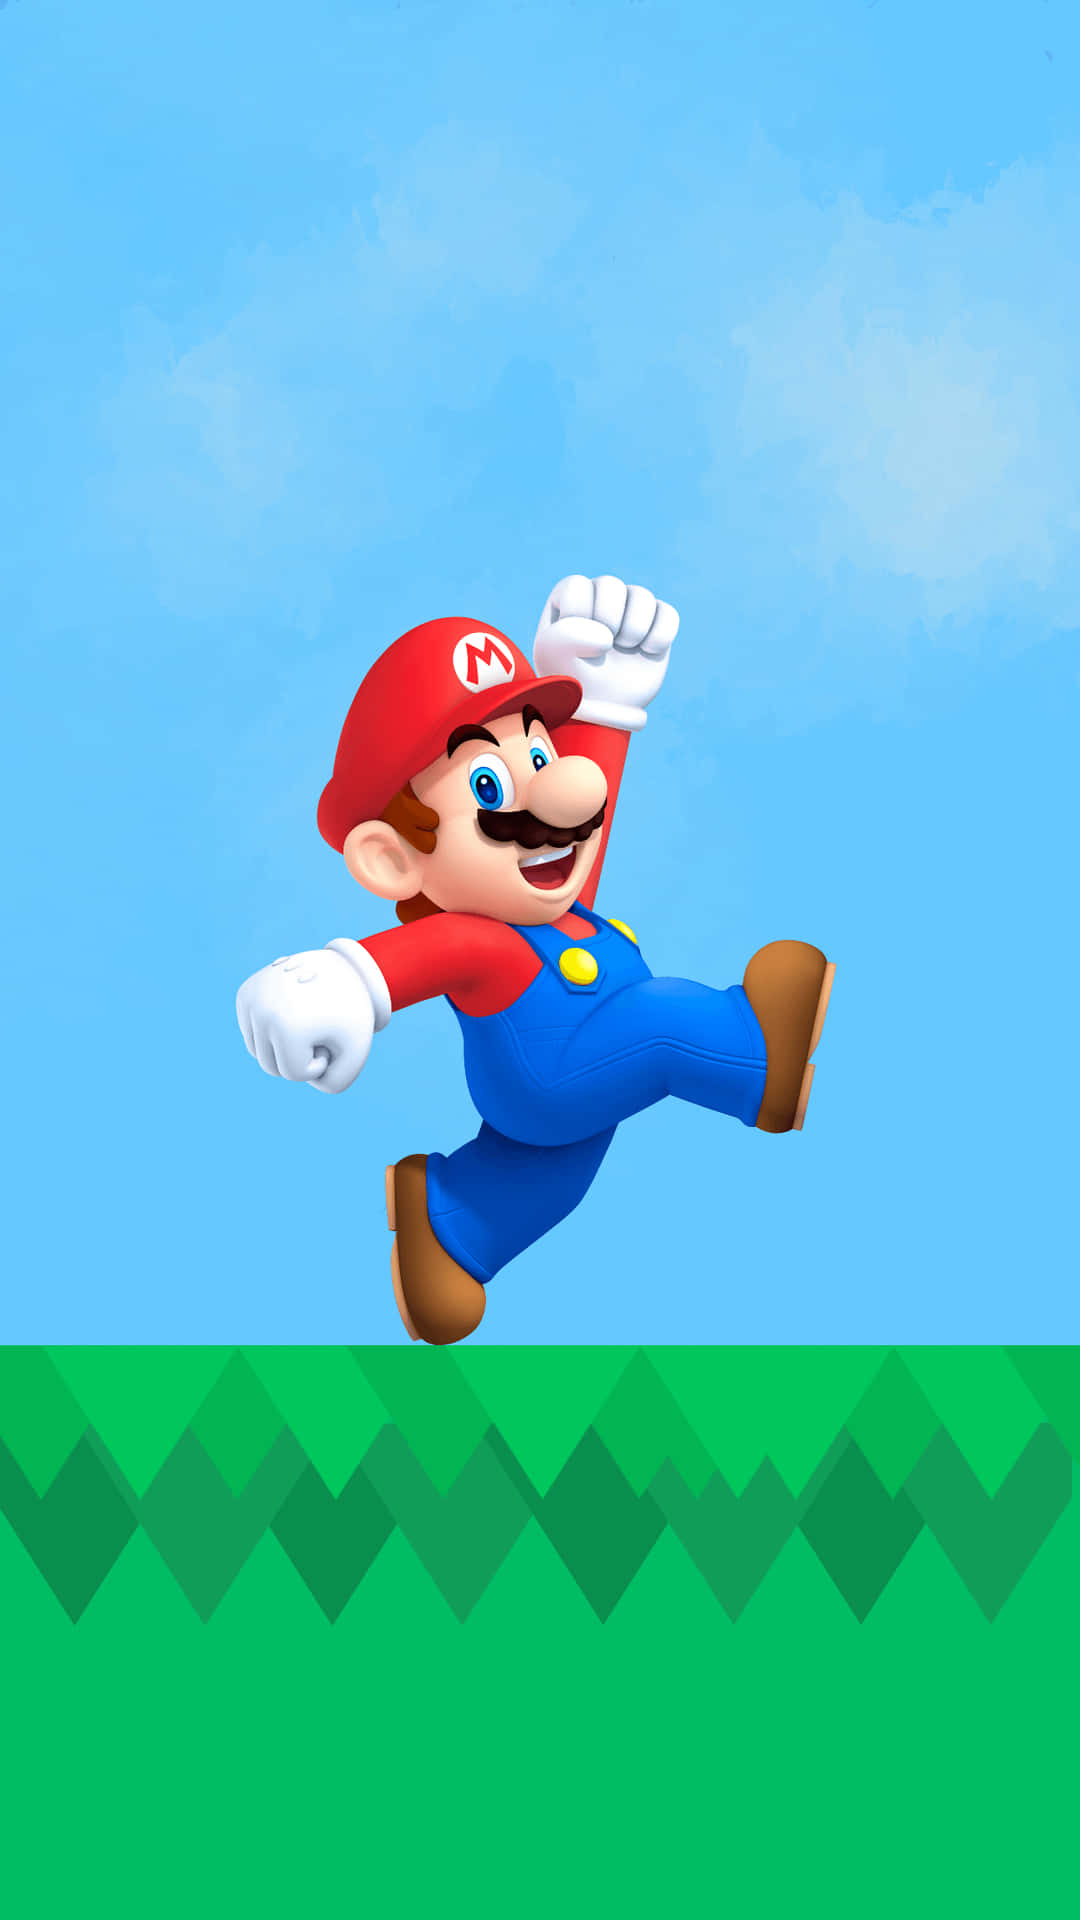 Walking On Grass Super Mario iPhone Wallpaper